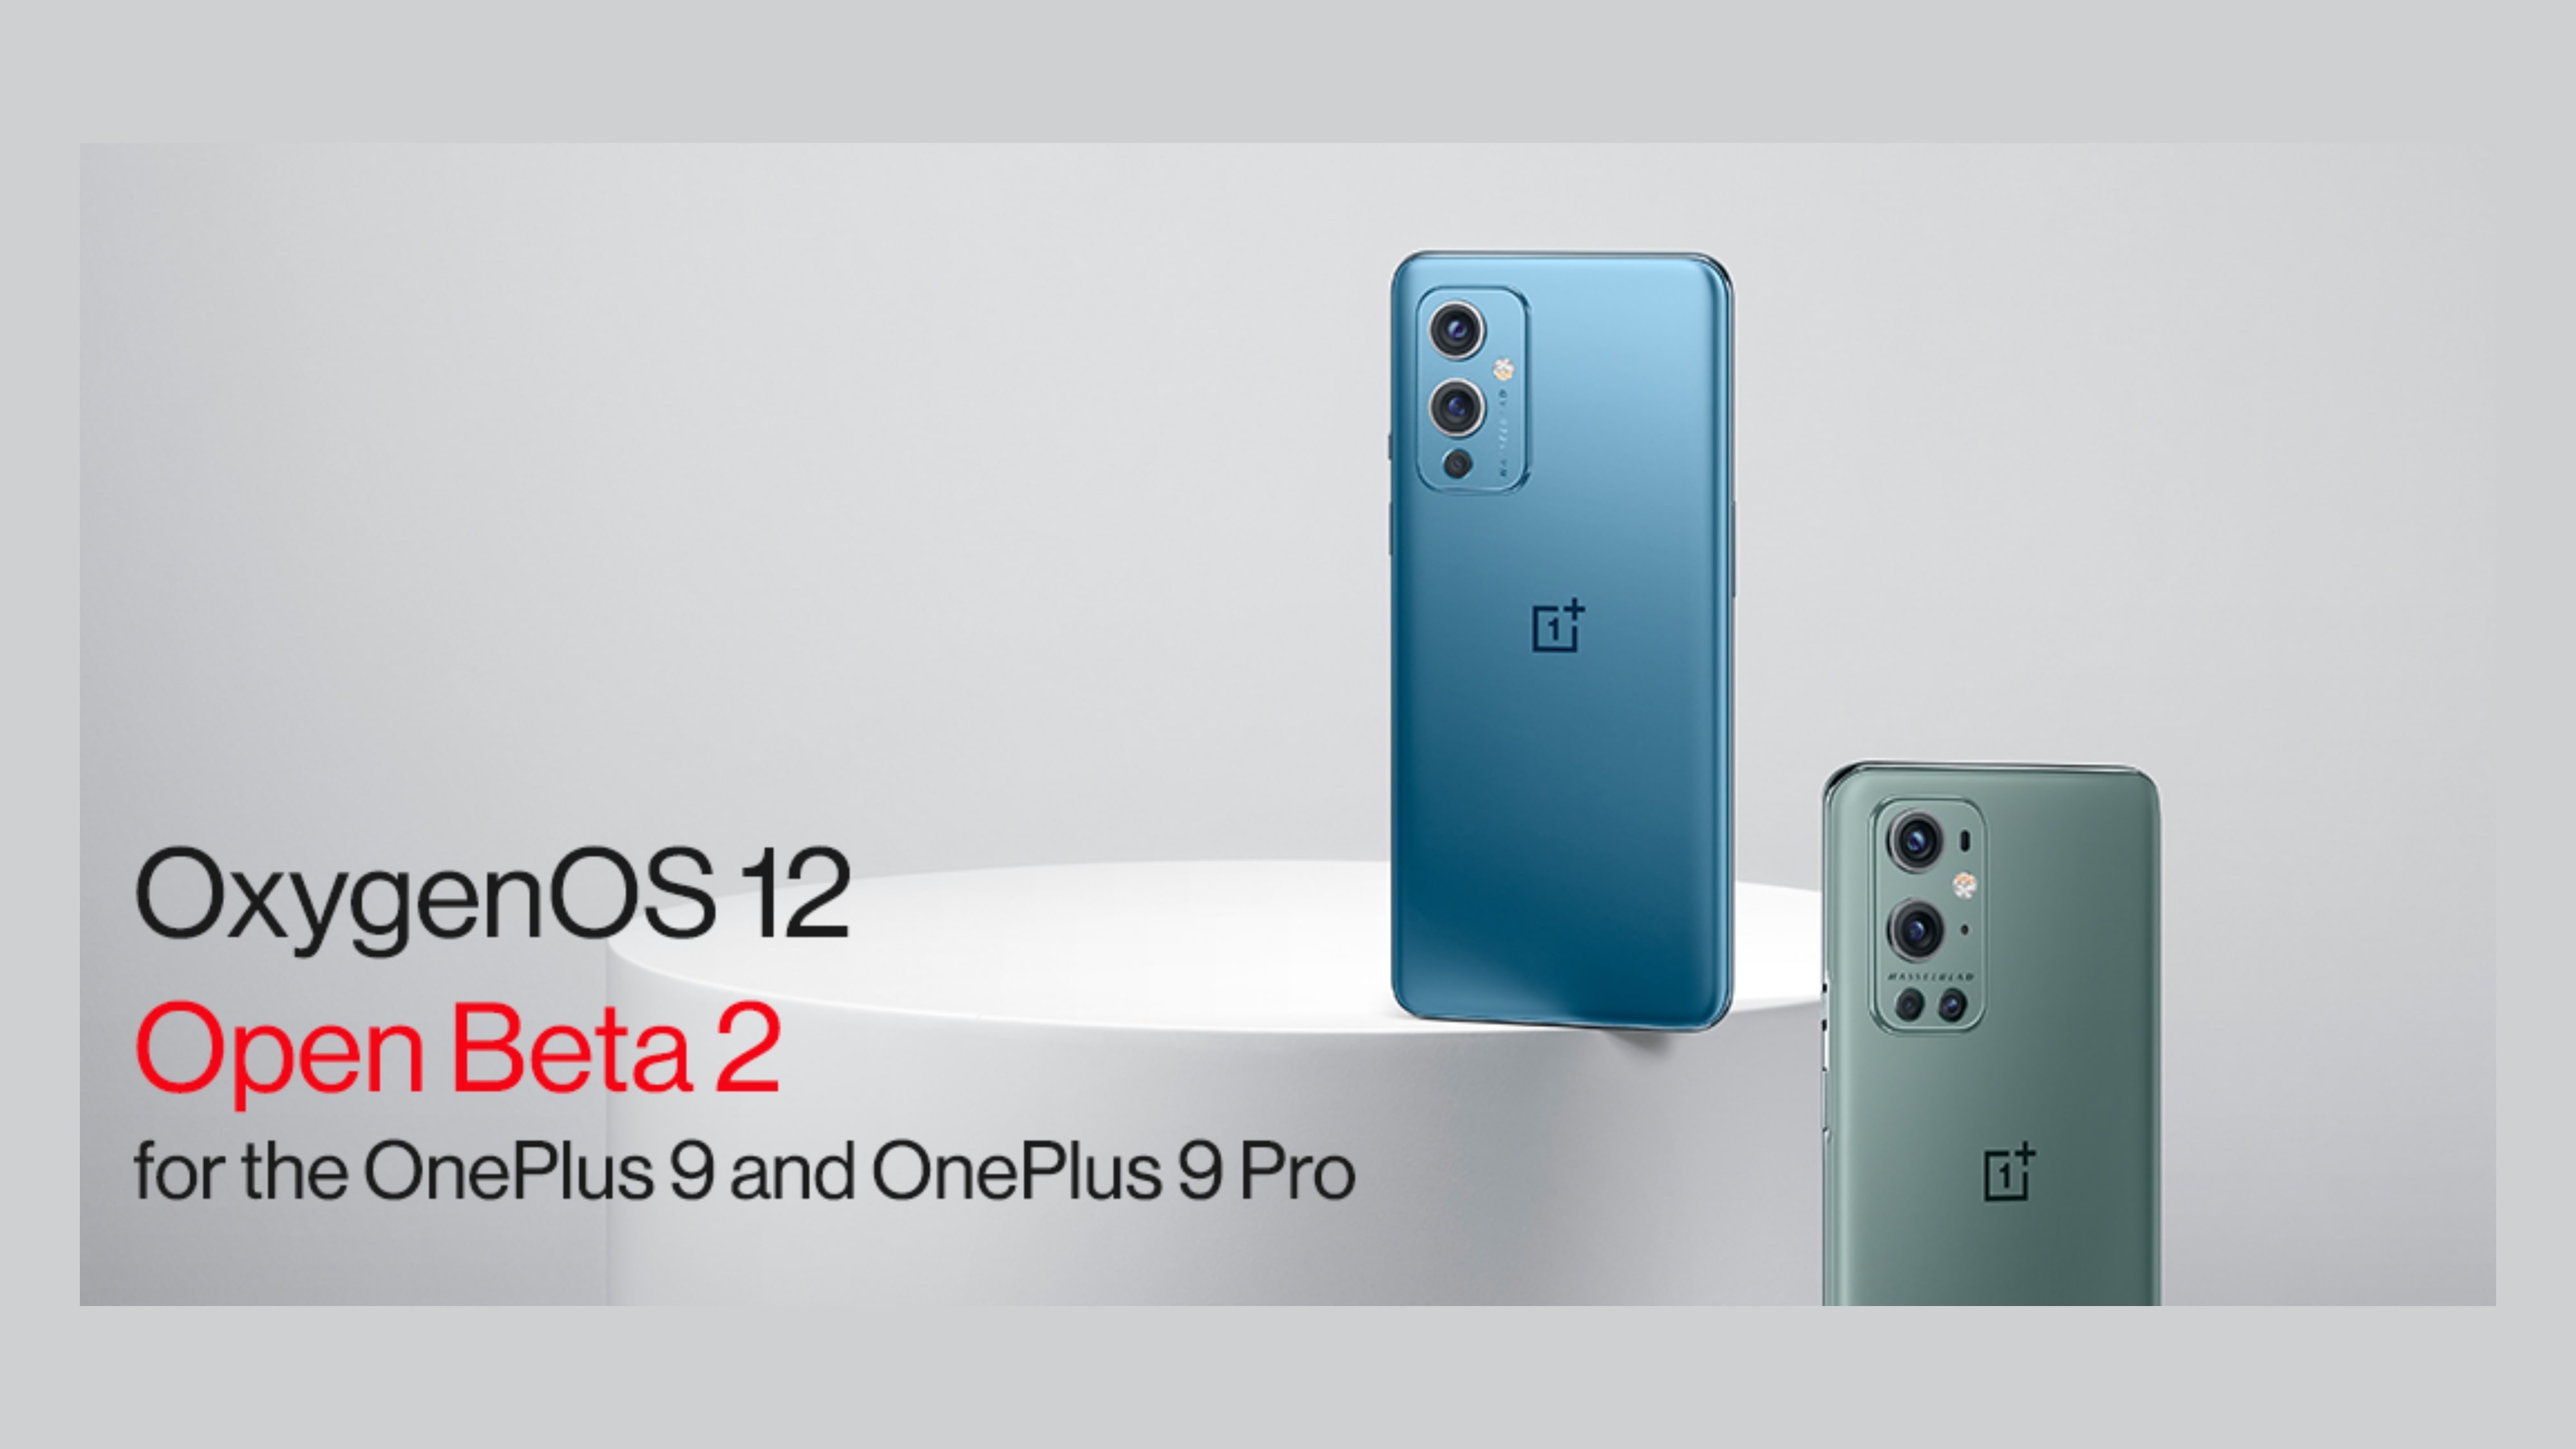 OnePlus 9 Pro OxygenOS 12 Open Beta 2